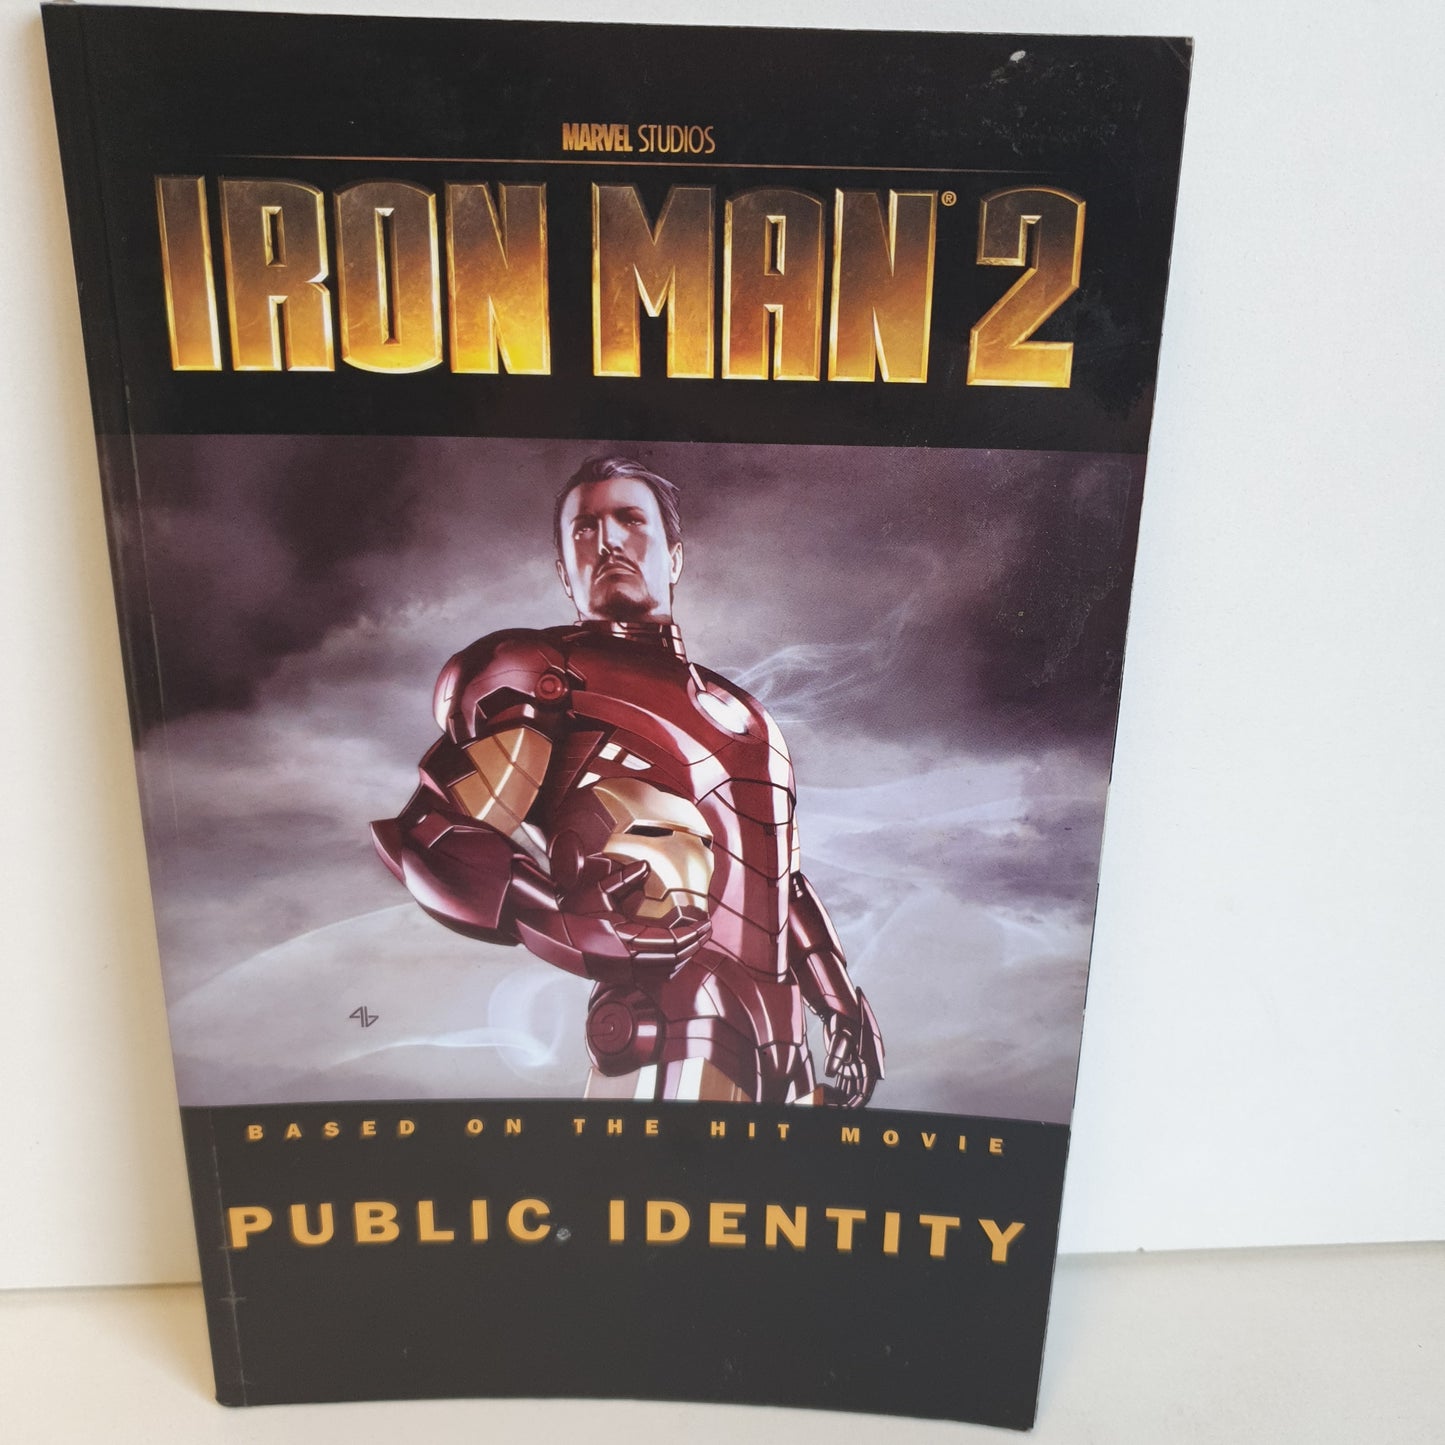 Iron Man 2 Public Identity by Joe Casey & Justin Theroux (2010)